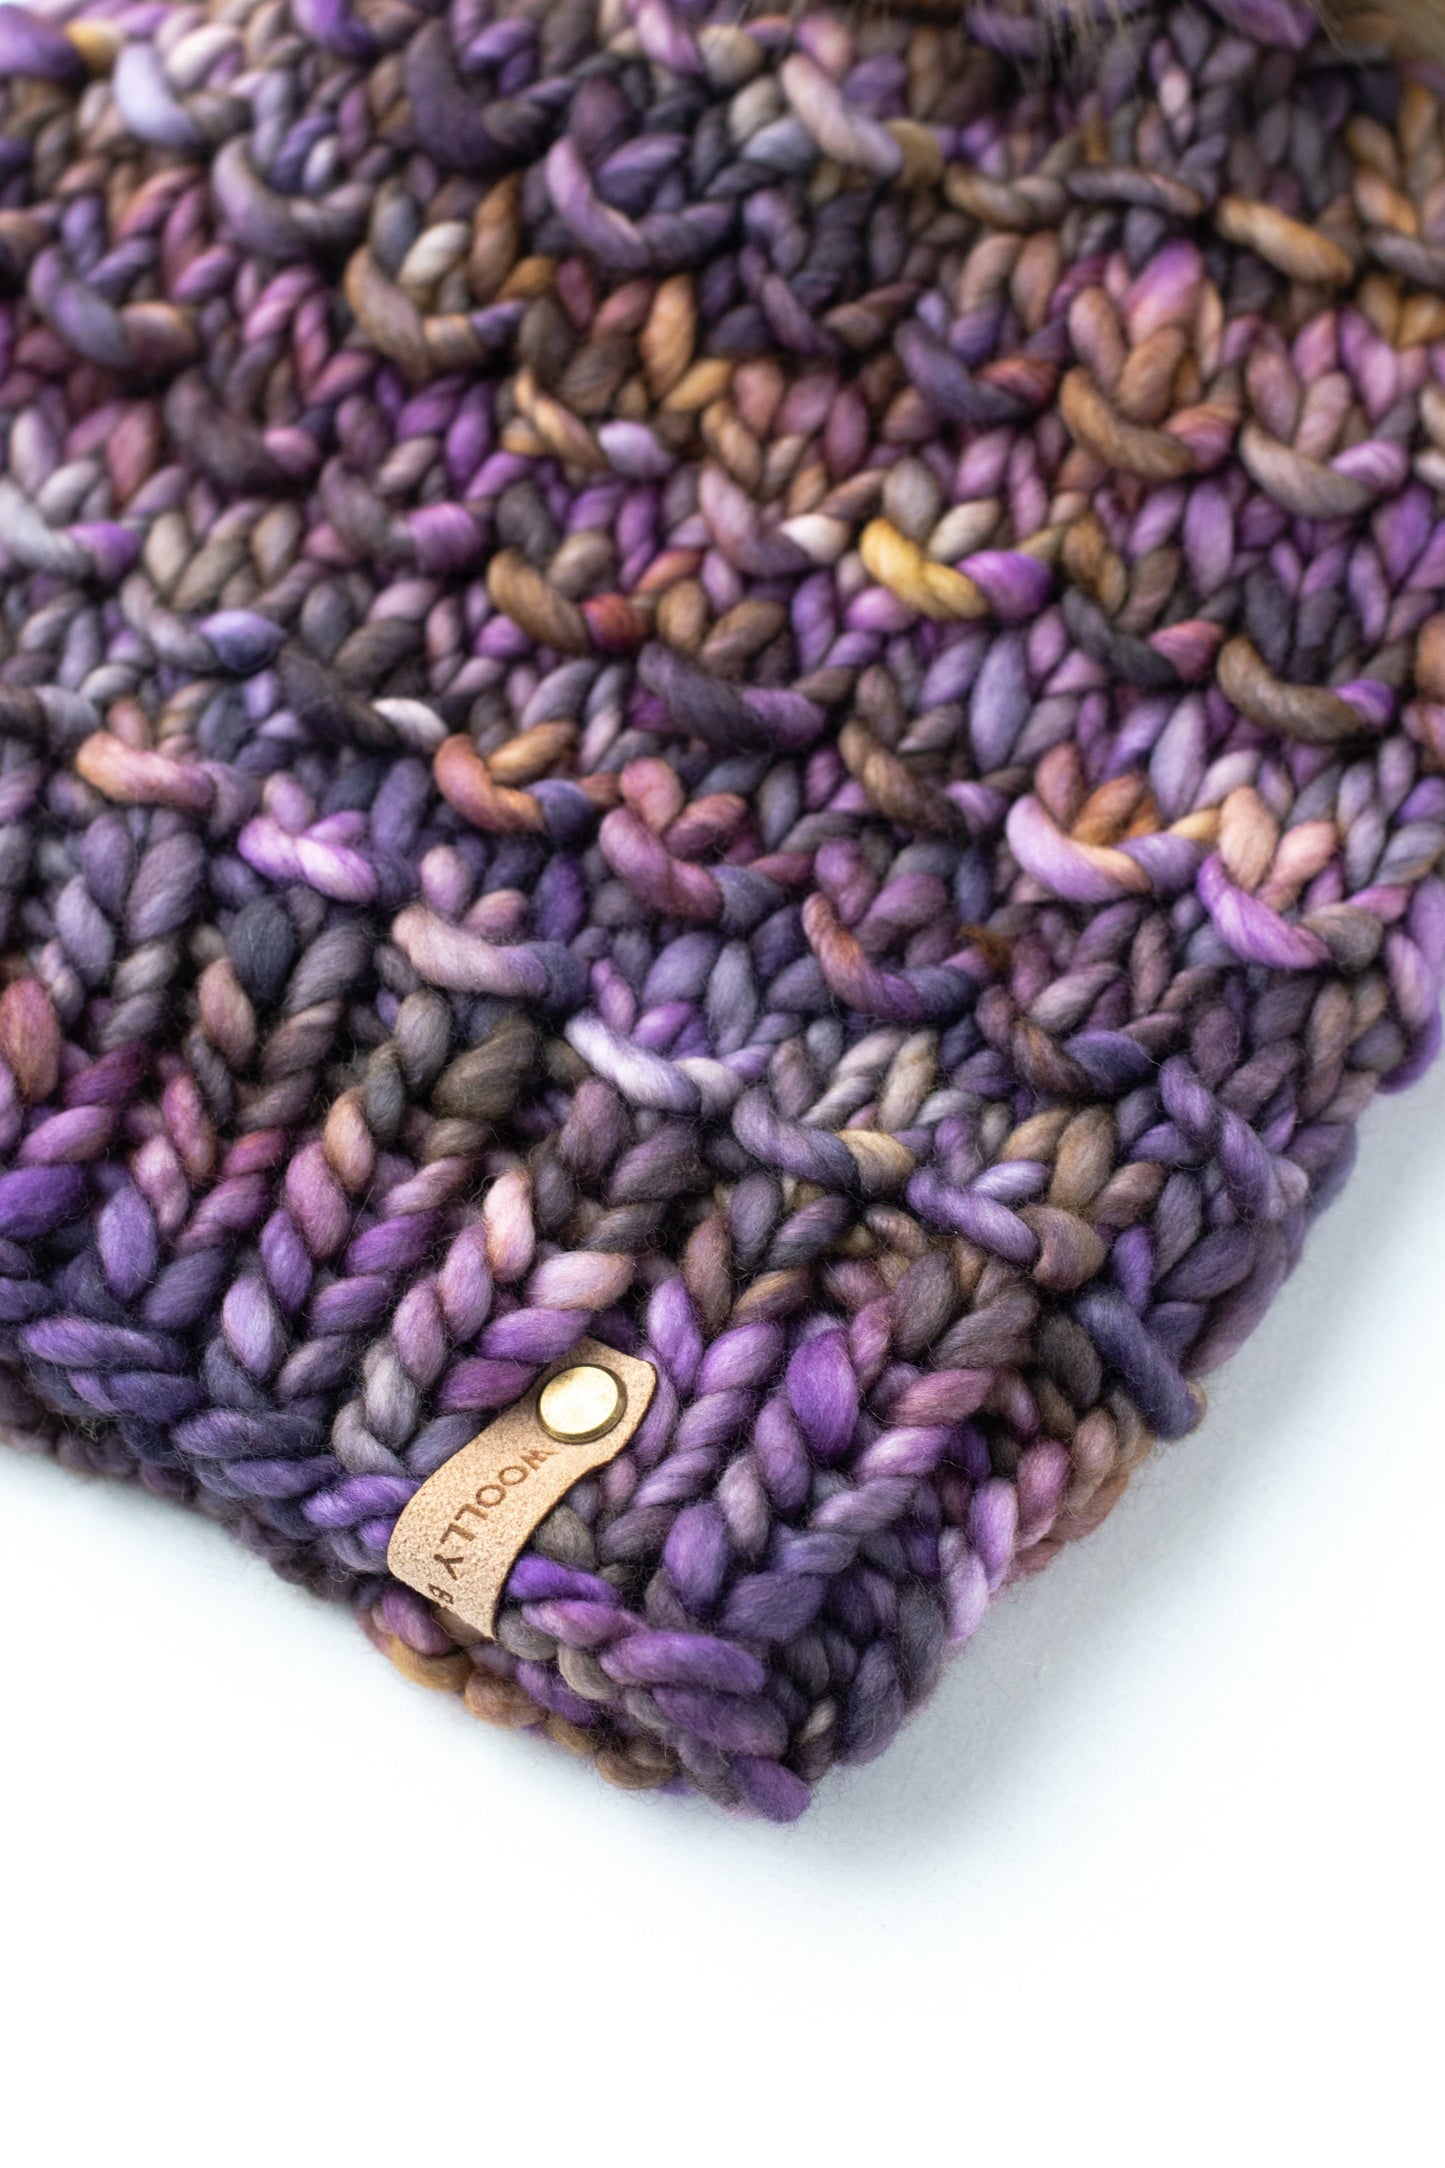 Purple Merino Wool Knit Hat with Faux Fur Pom Pom